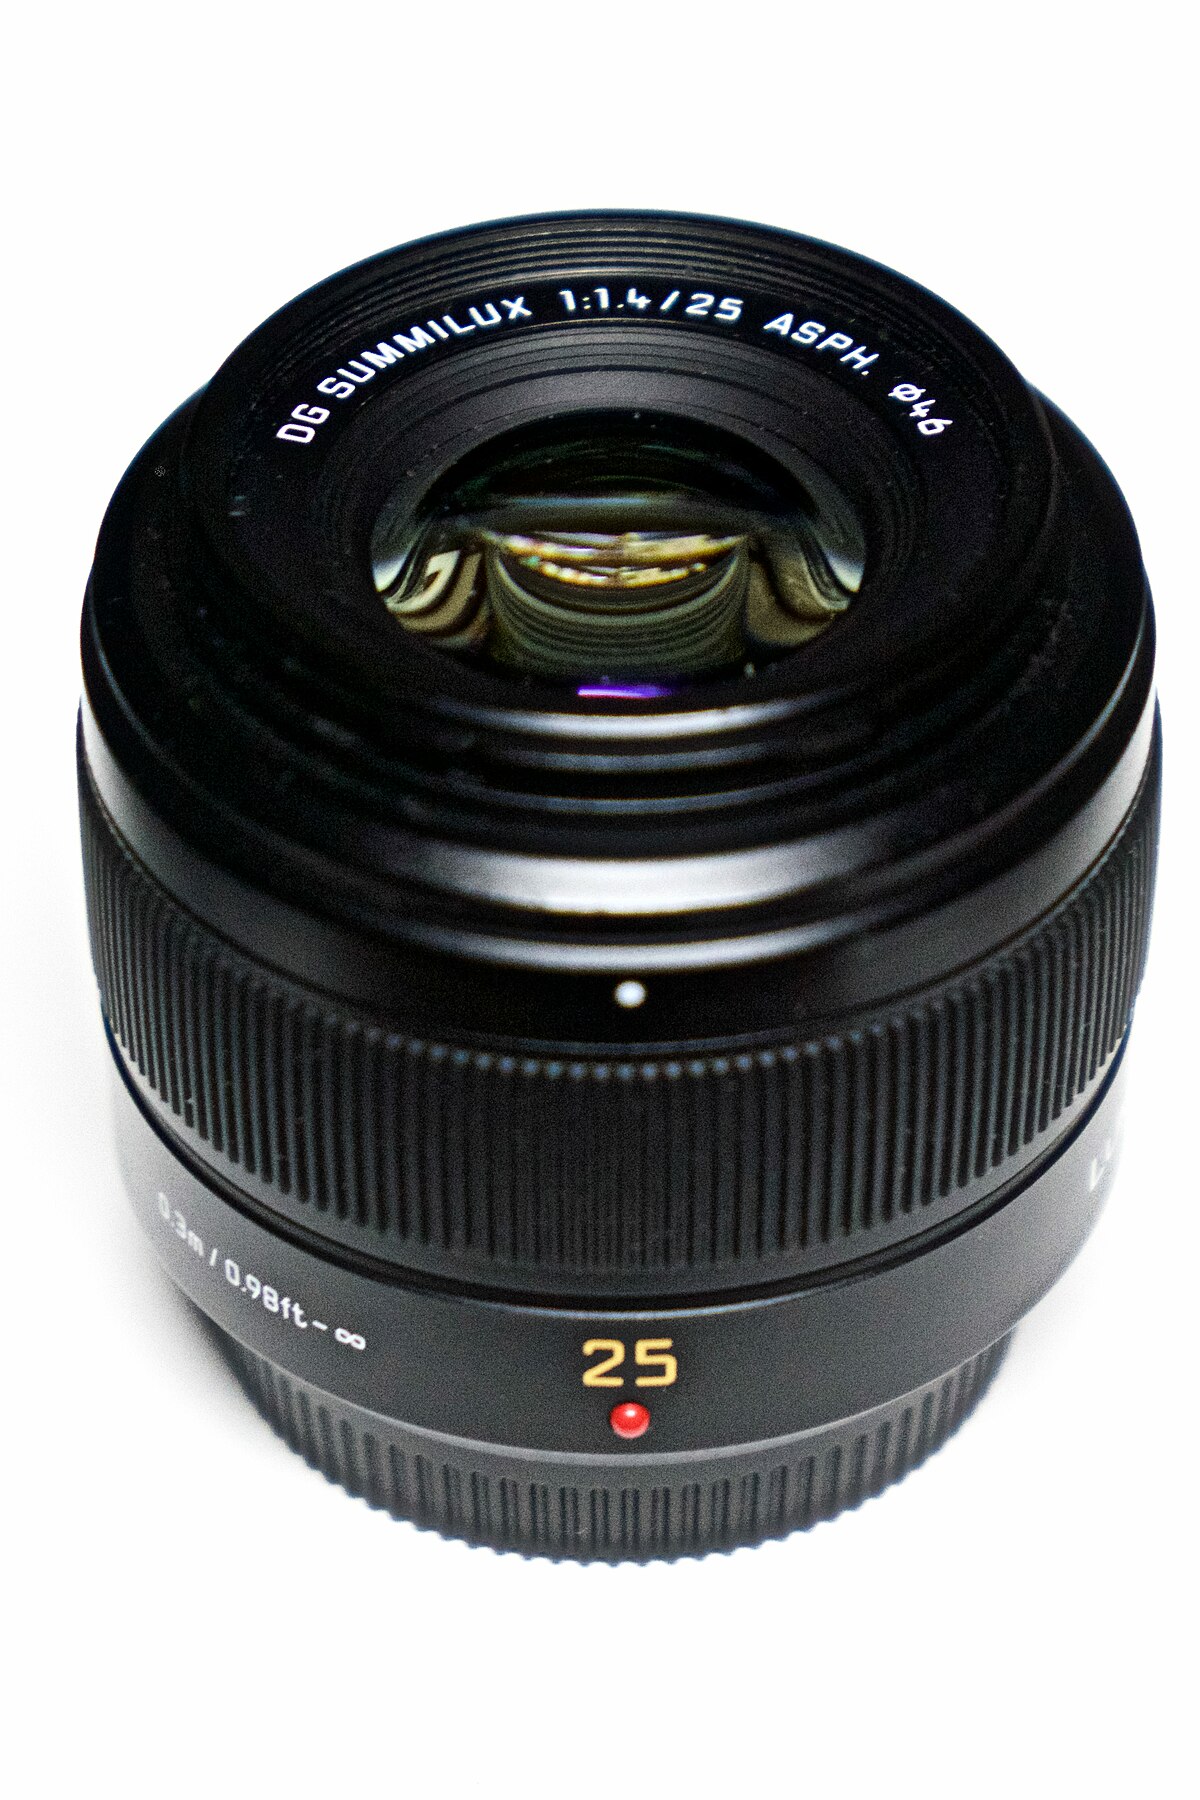 Panasonic Leica DG 25mm lens - Wikipedia